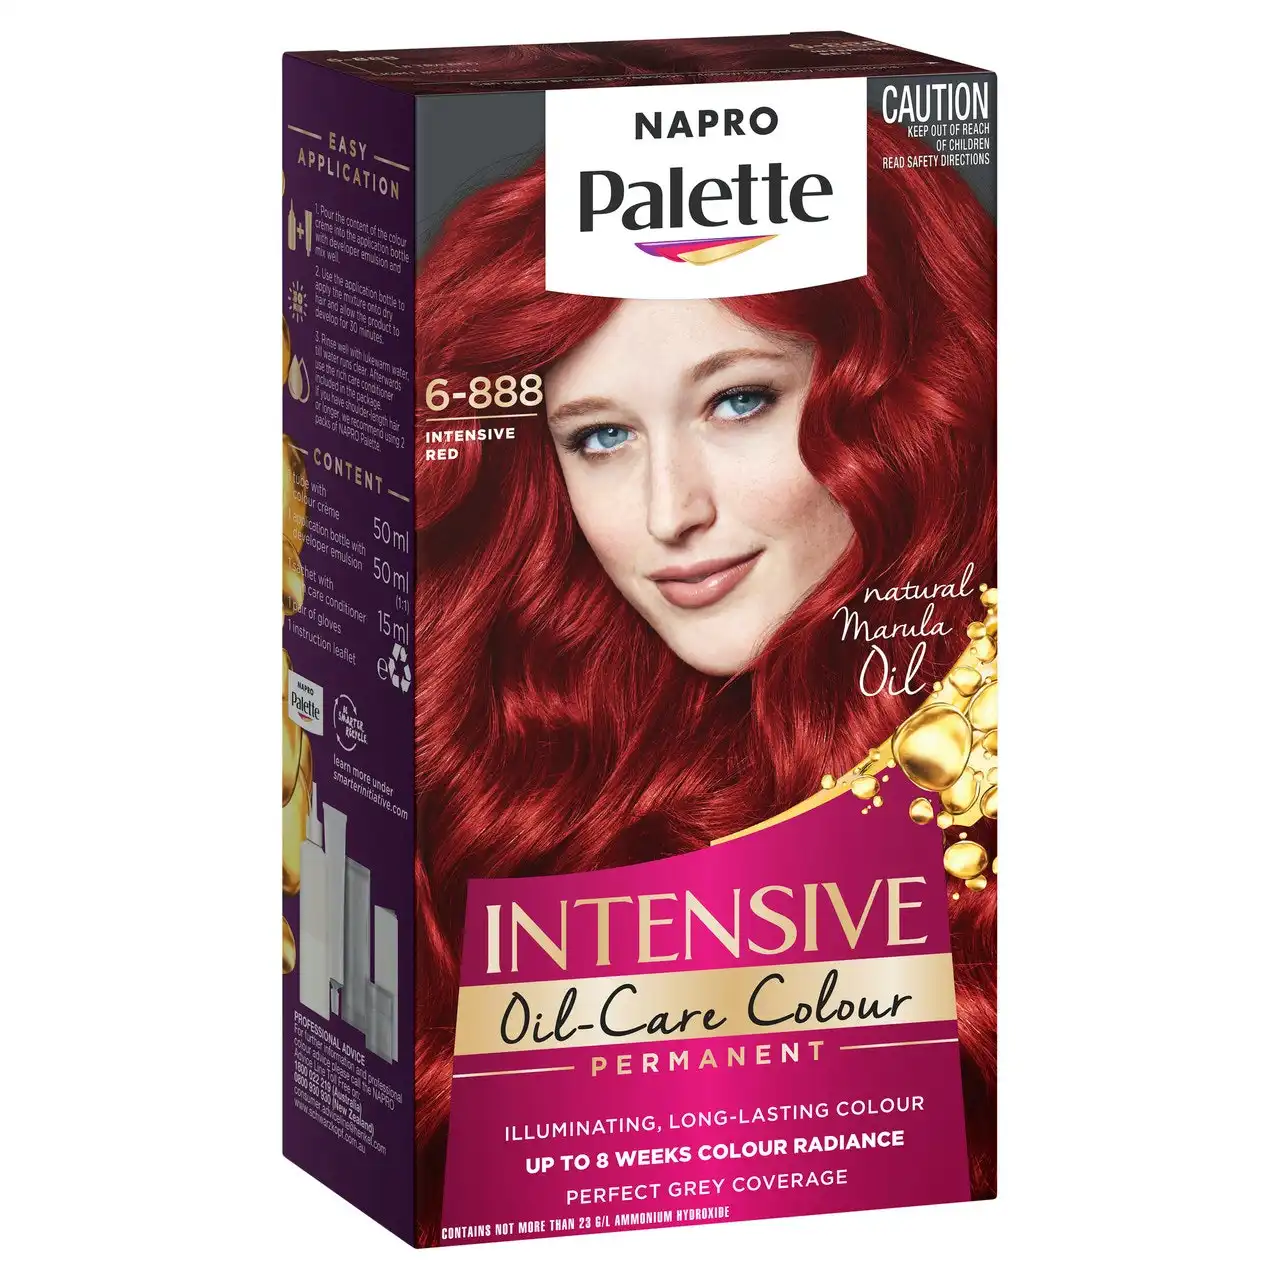 Napro Palette Intensive Creme Colour Permanent 6 - 888 Intensive Red